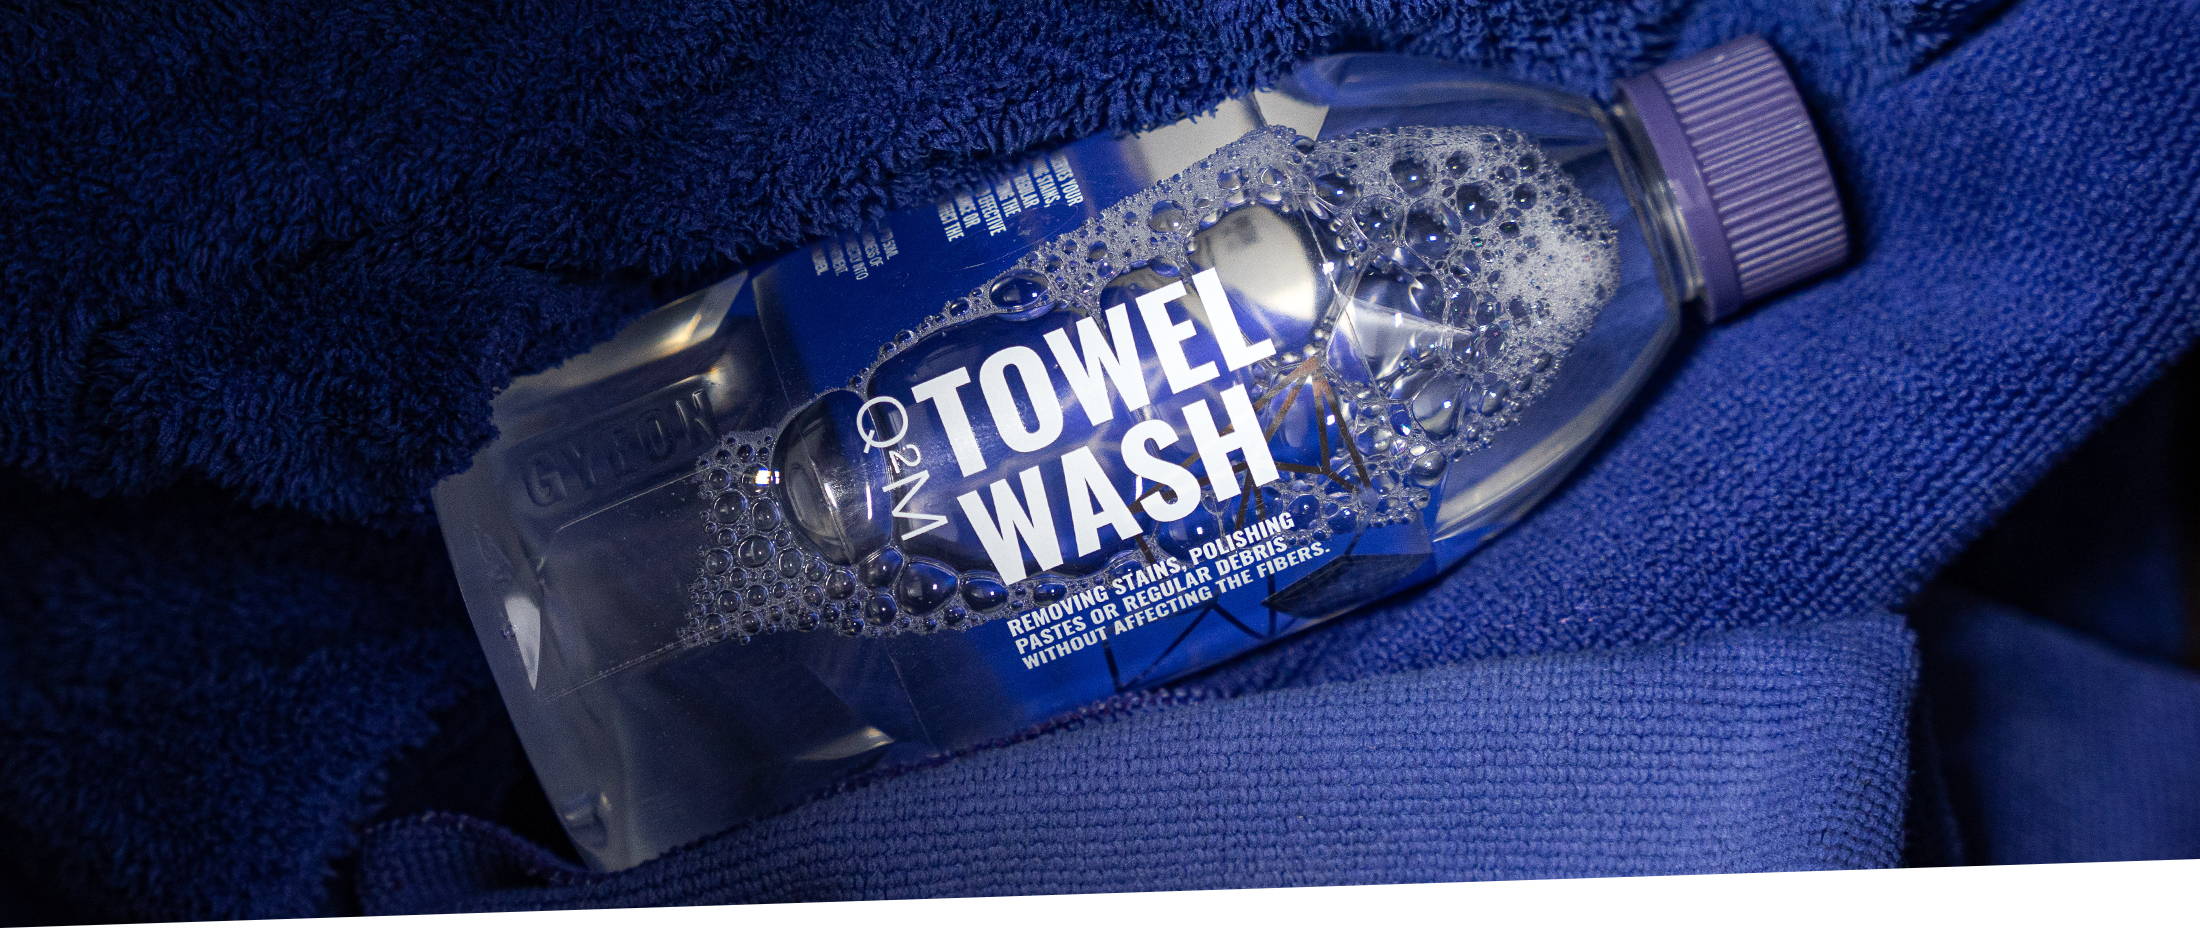 Microfiber Towel Wash